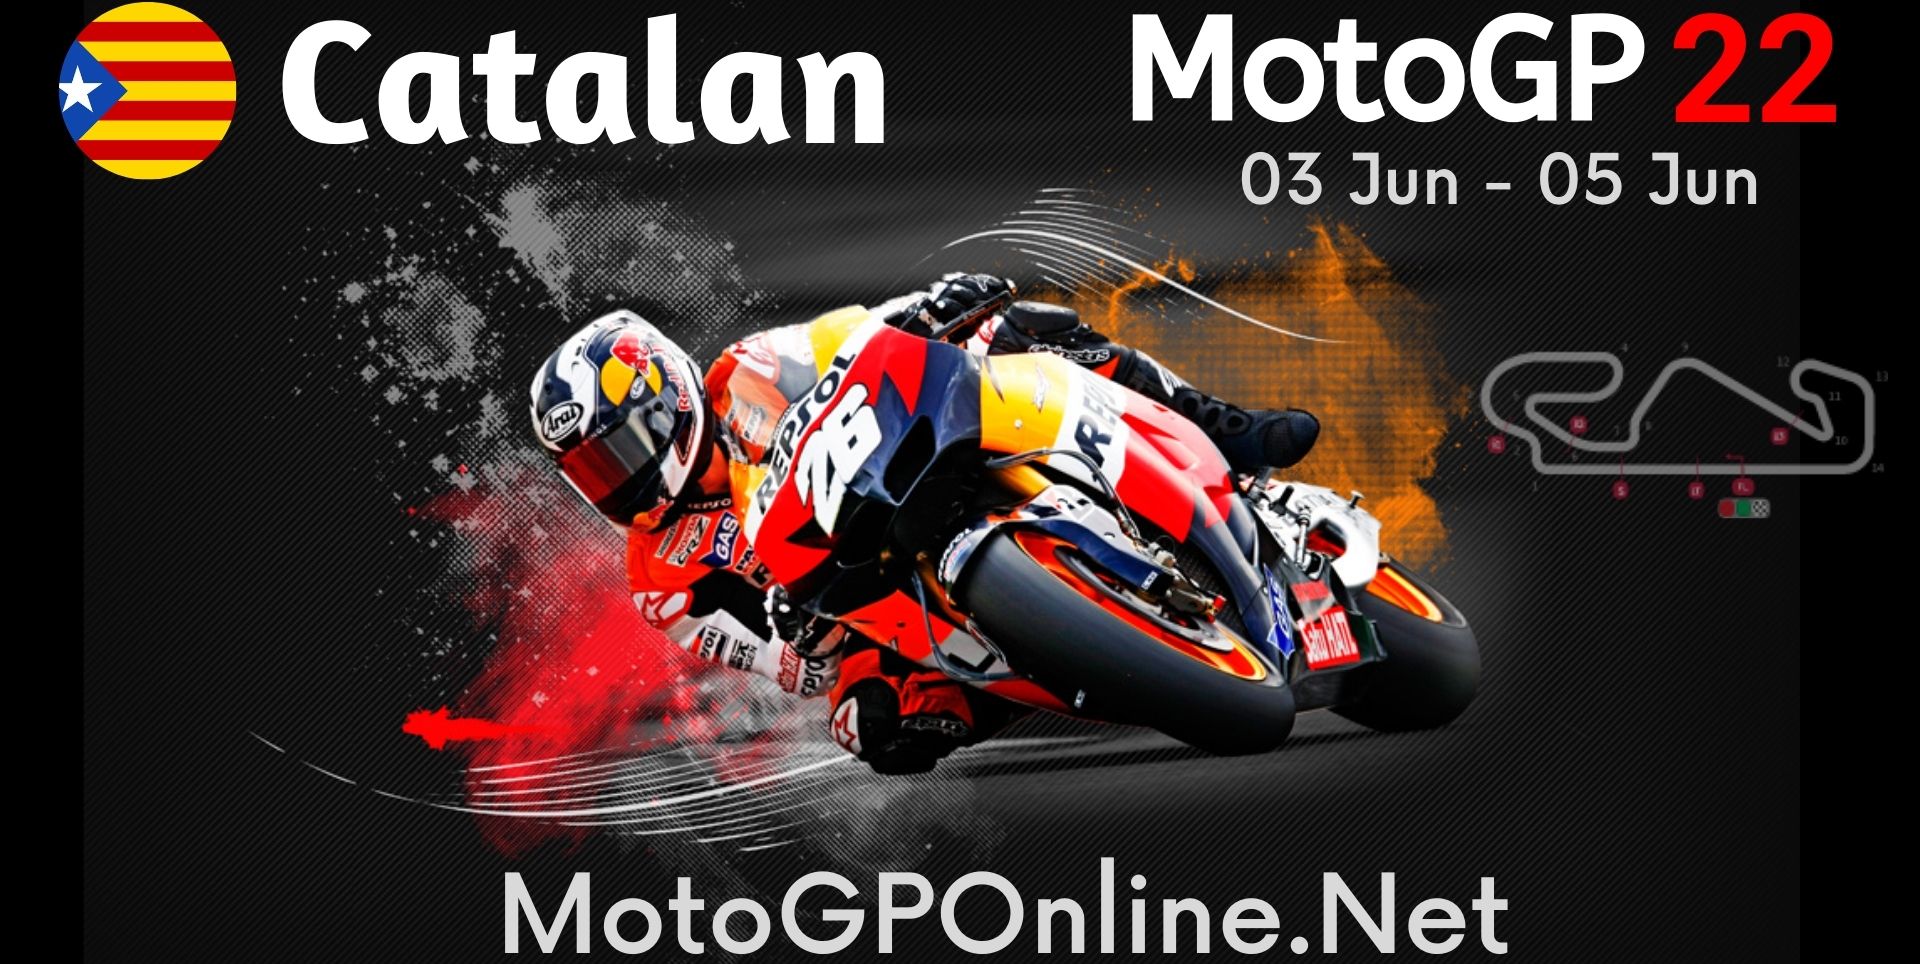 Motogp Catalunya Grand Prix 2015 Live Online